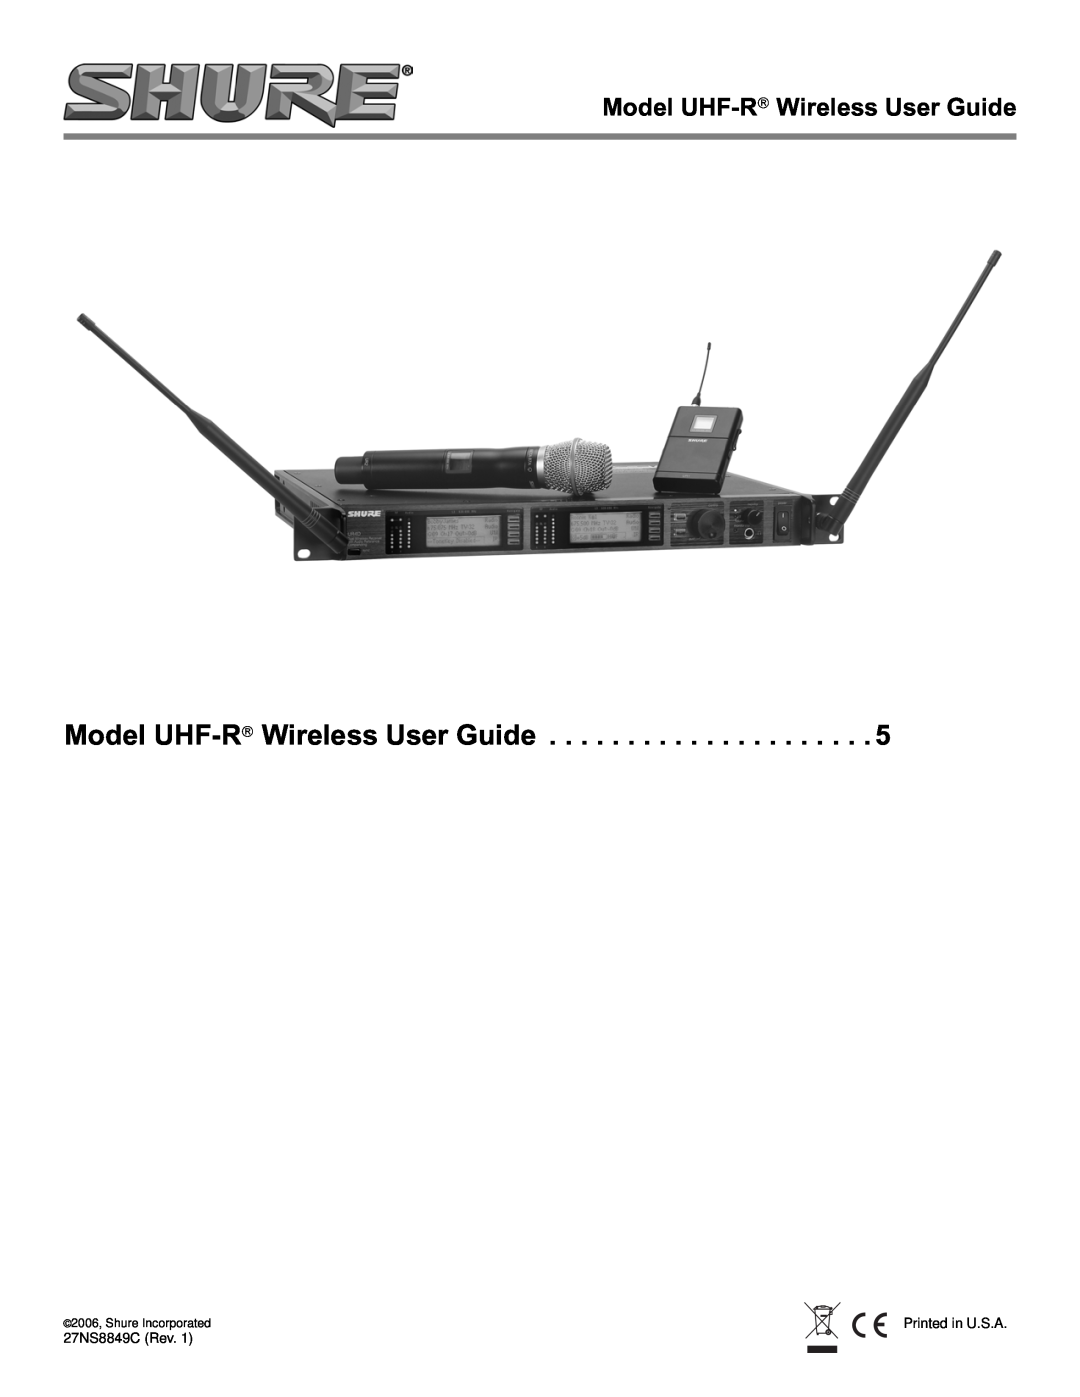 Shure manual Model UHF-R≤ Wireless User Guide, 27NS8849C Rev 